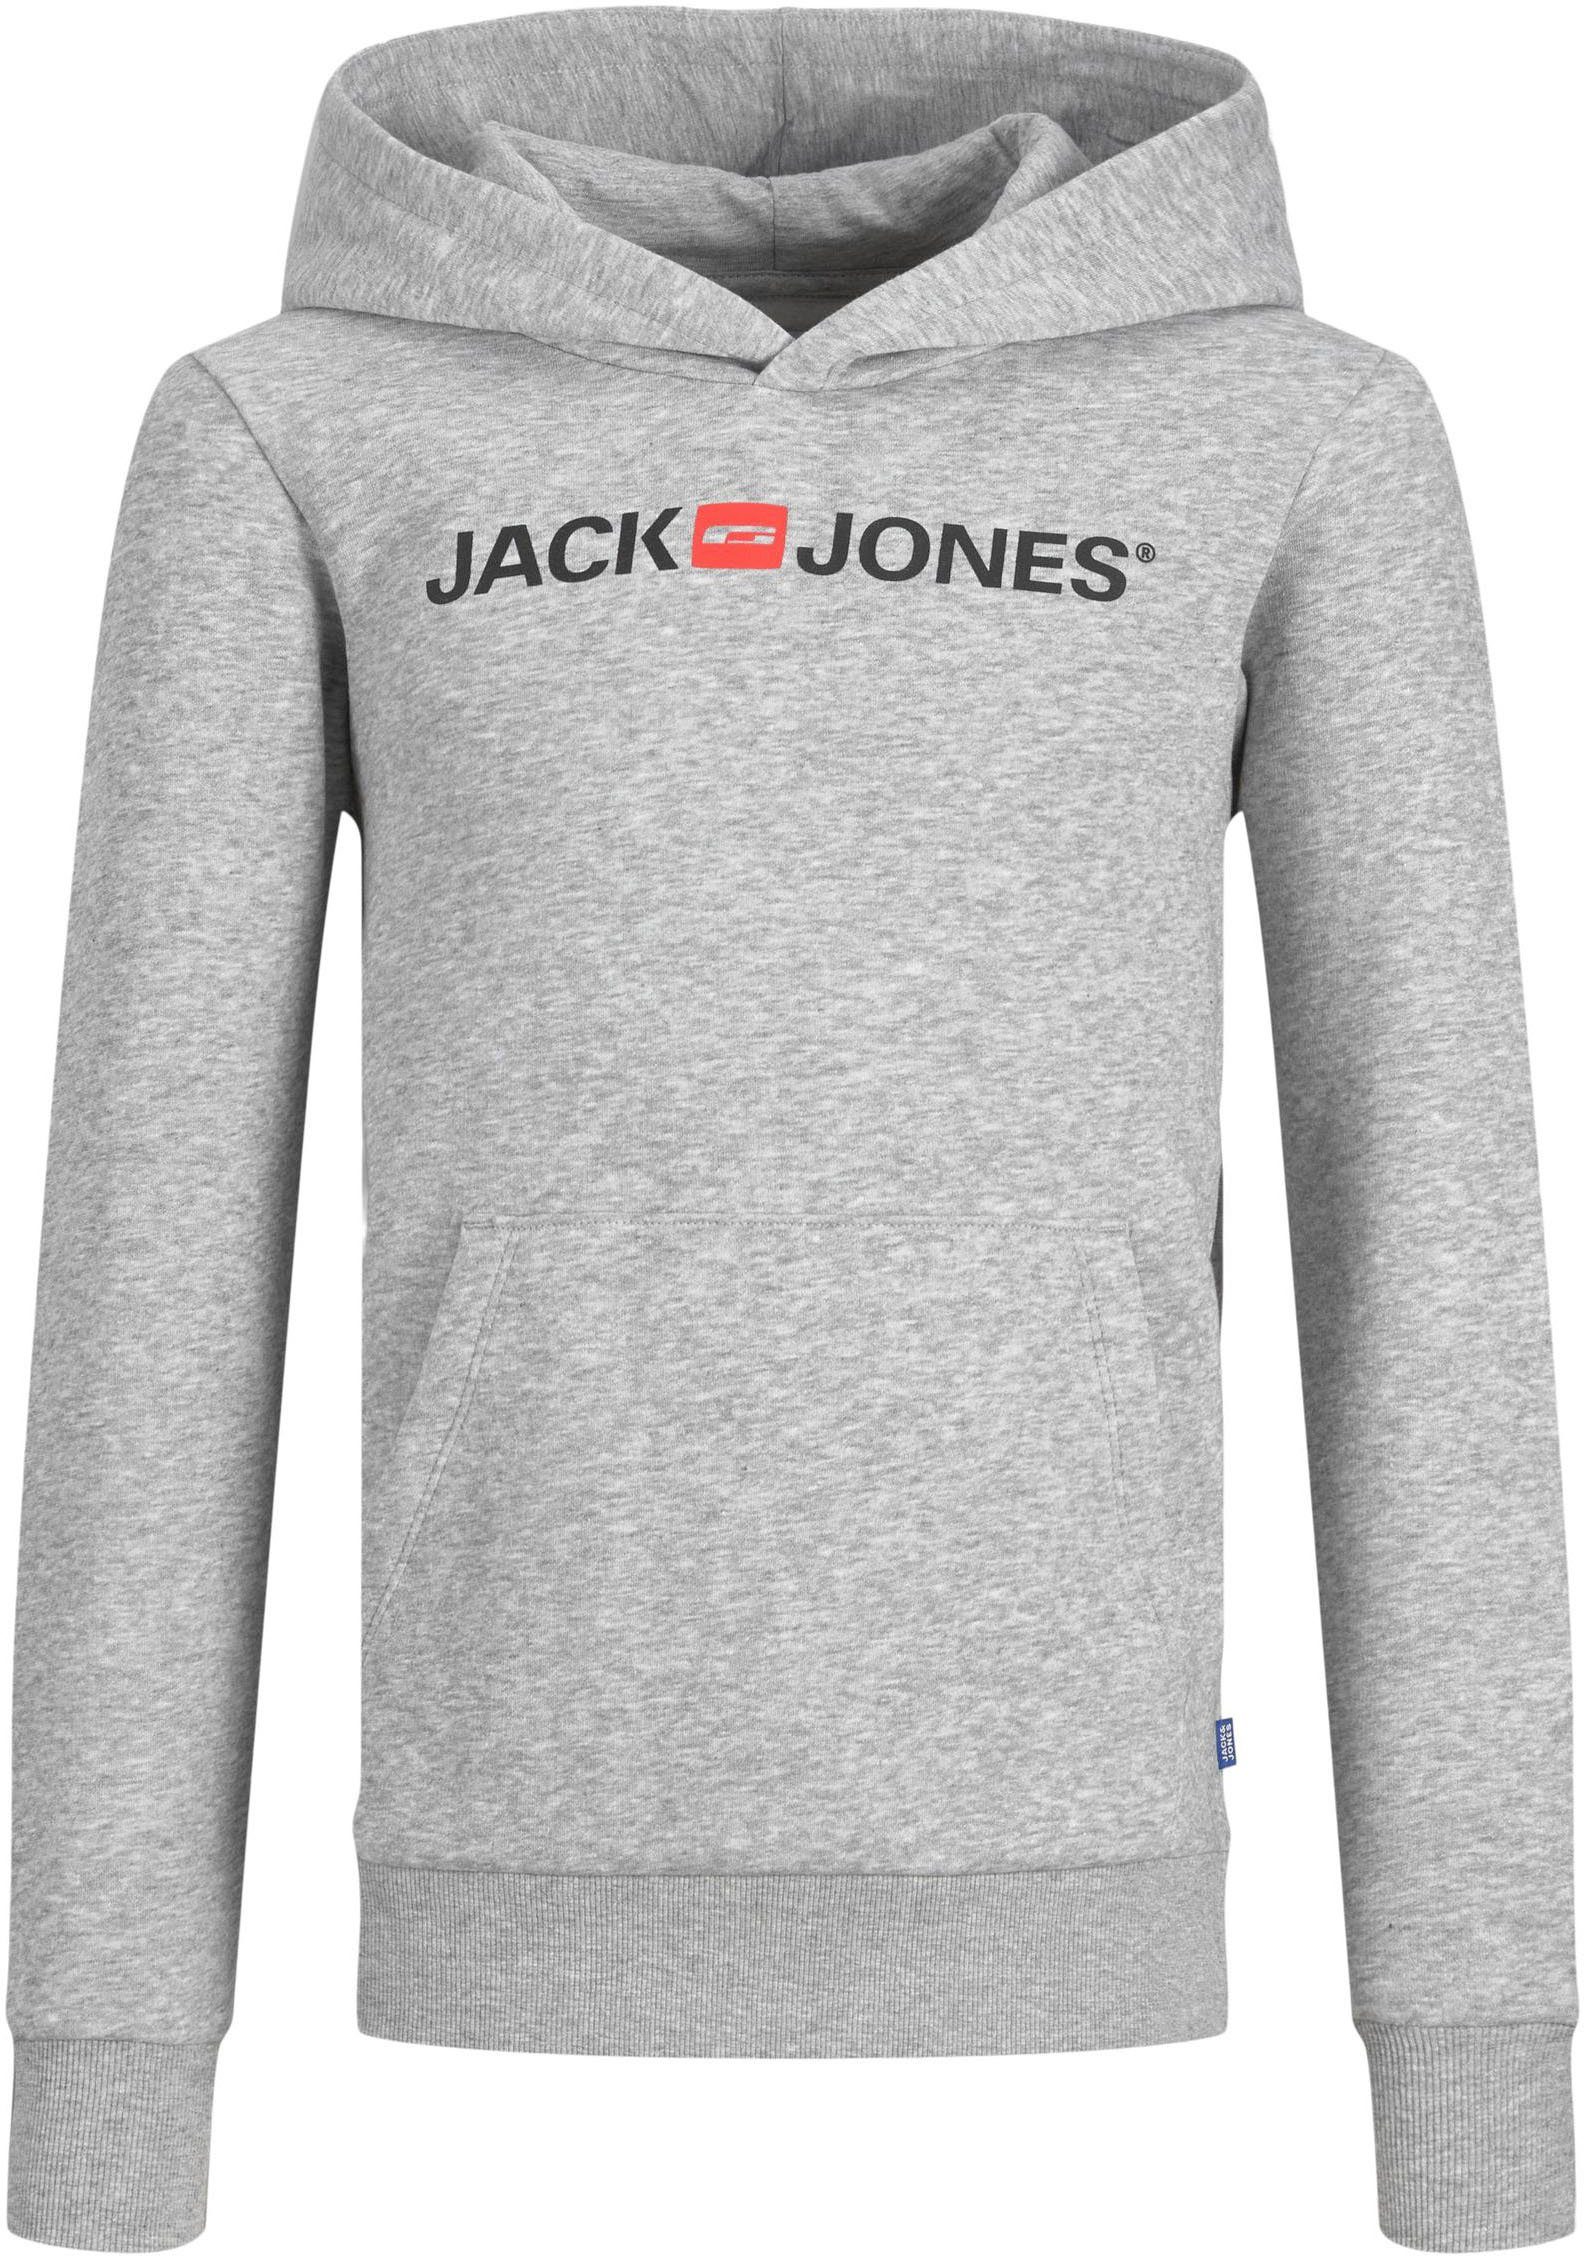 Jones & unbekannt Kapuzensweatshirt Junior Jack